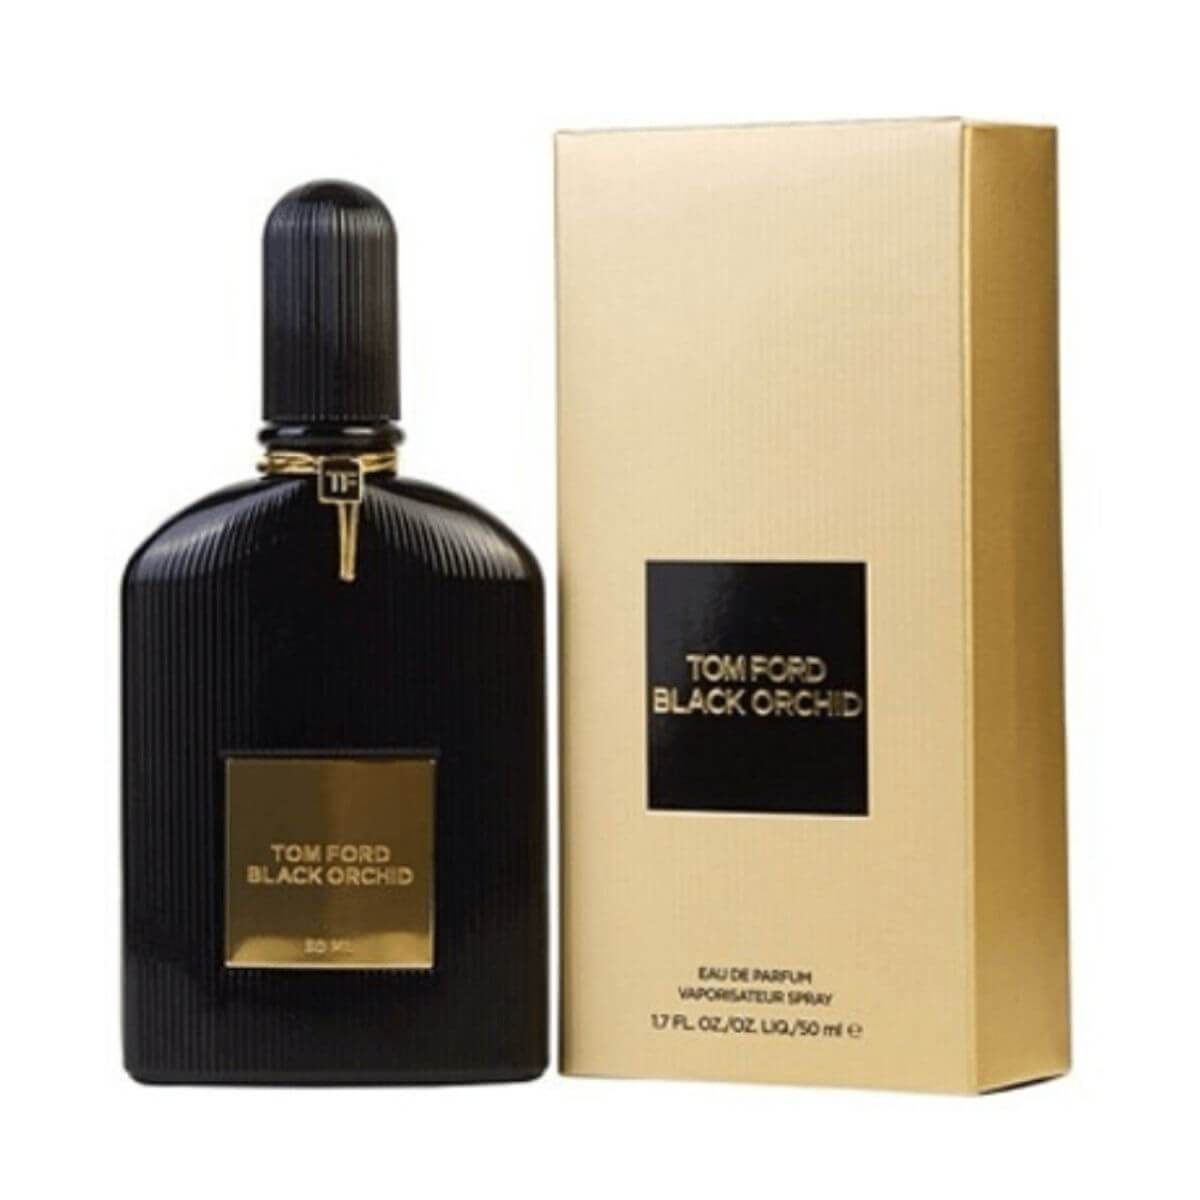 Tom Ford Black Orchid Parfum - 50ML